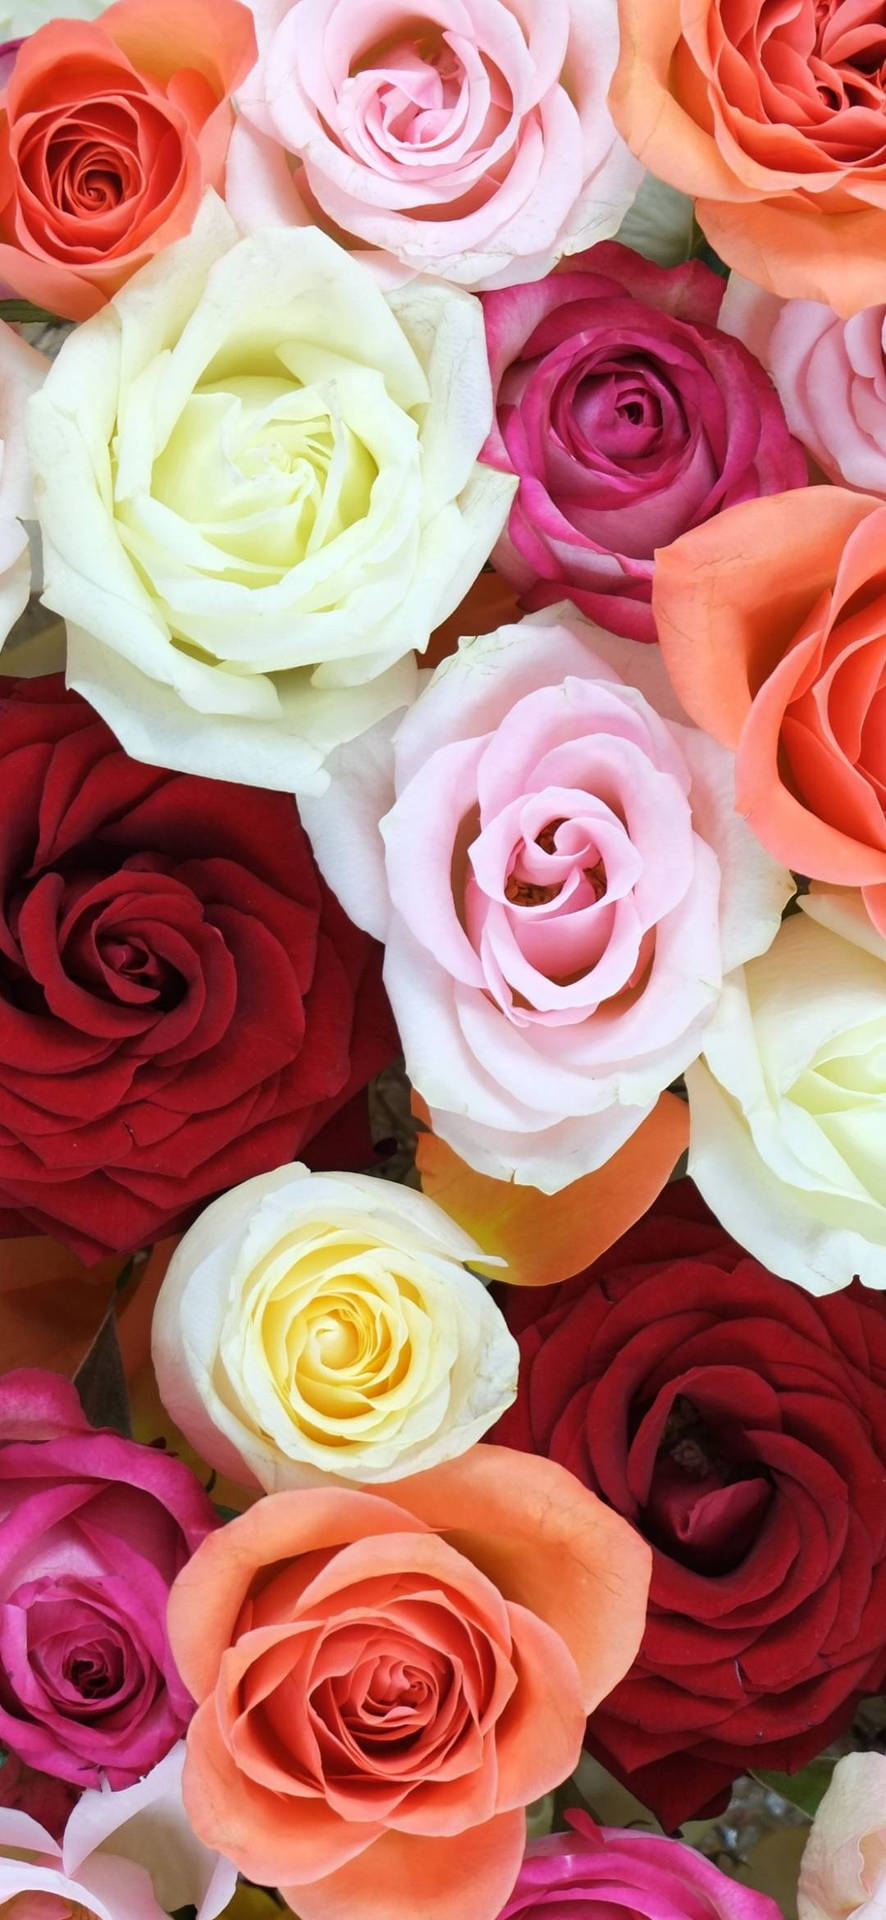 Diverse Palette Of Vibrant Roses For Flower Phone Wallpaper Background